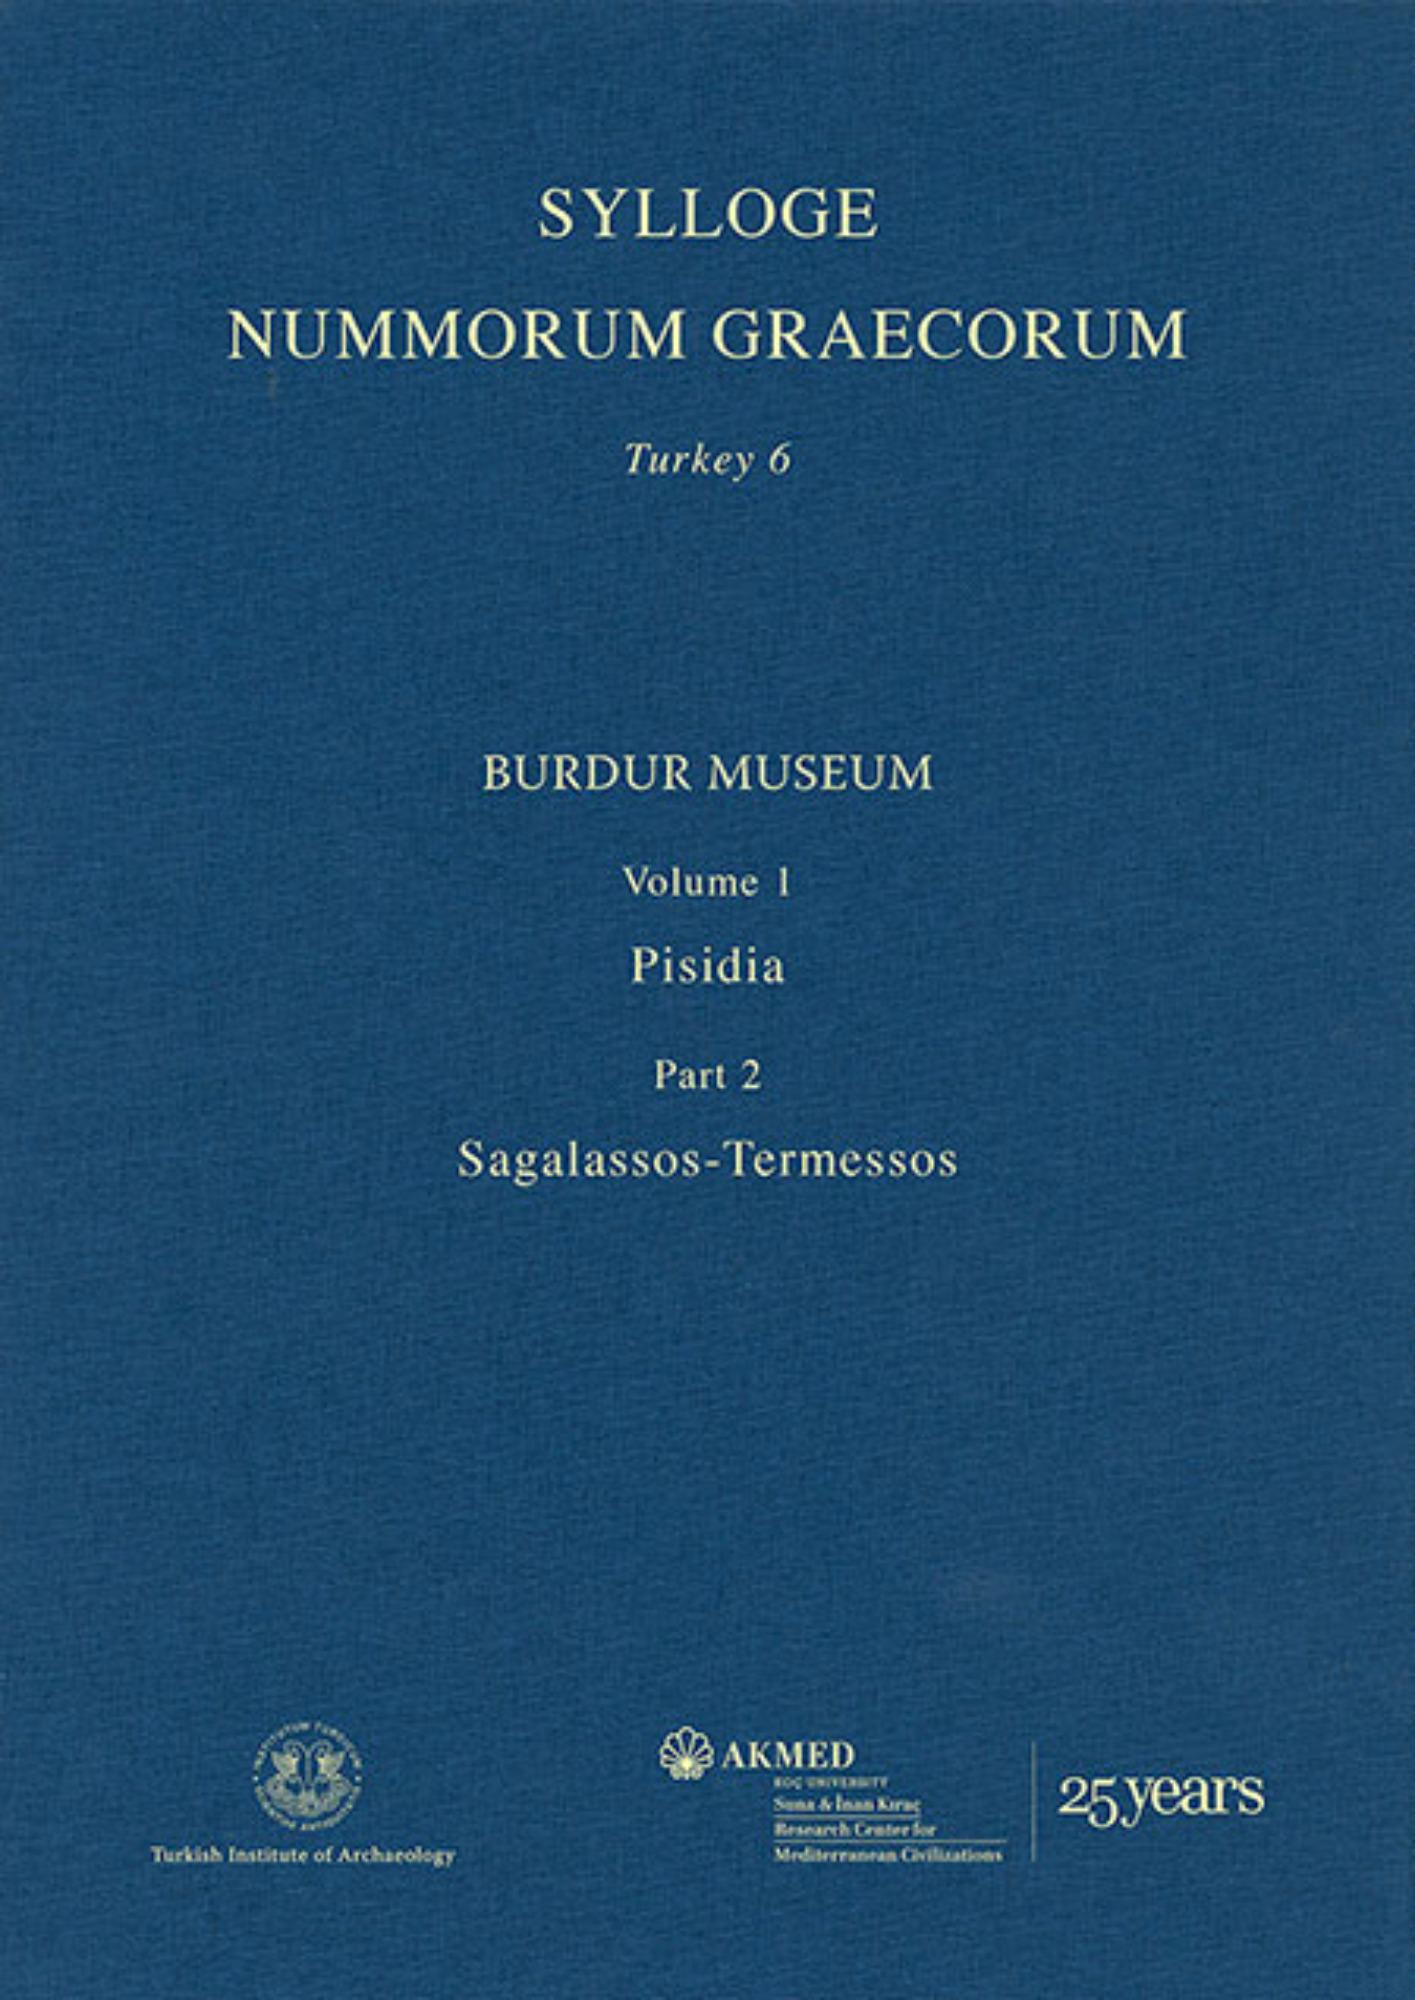 Köker, Hüseyin : Sylloge Nummorum Graecorum Turkey 6. Burdur Museum, Volume 1: Pisidia, Part 2: Sagalassos-Termessos